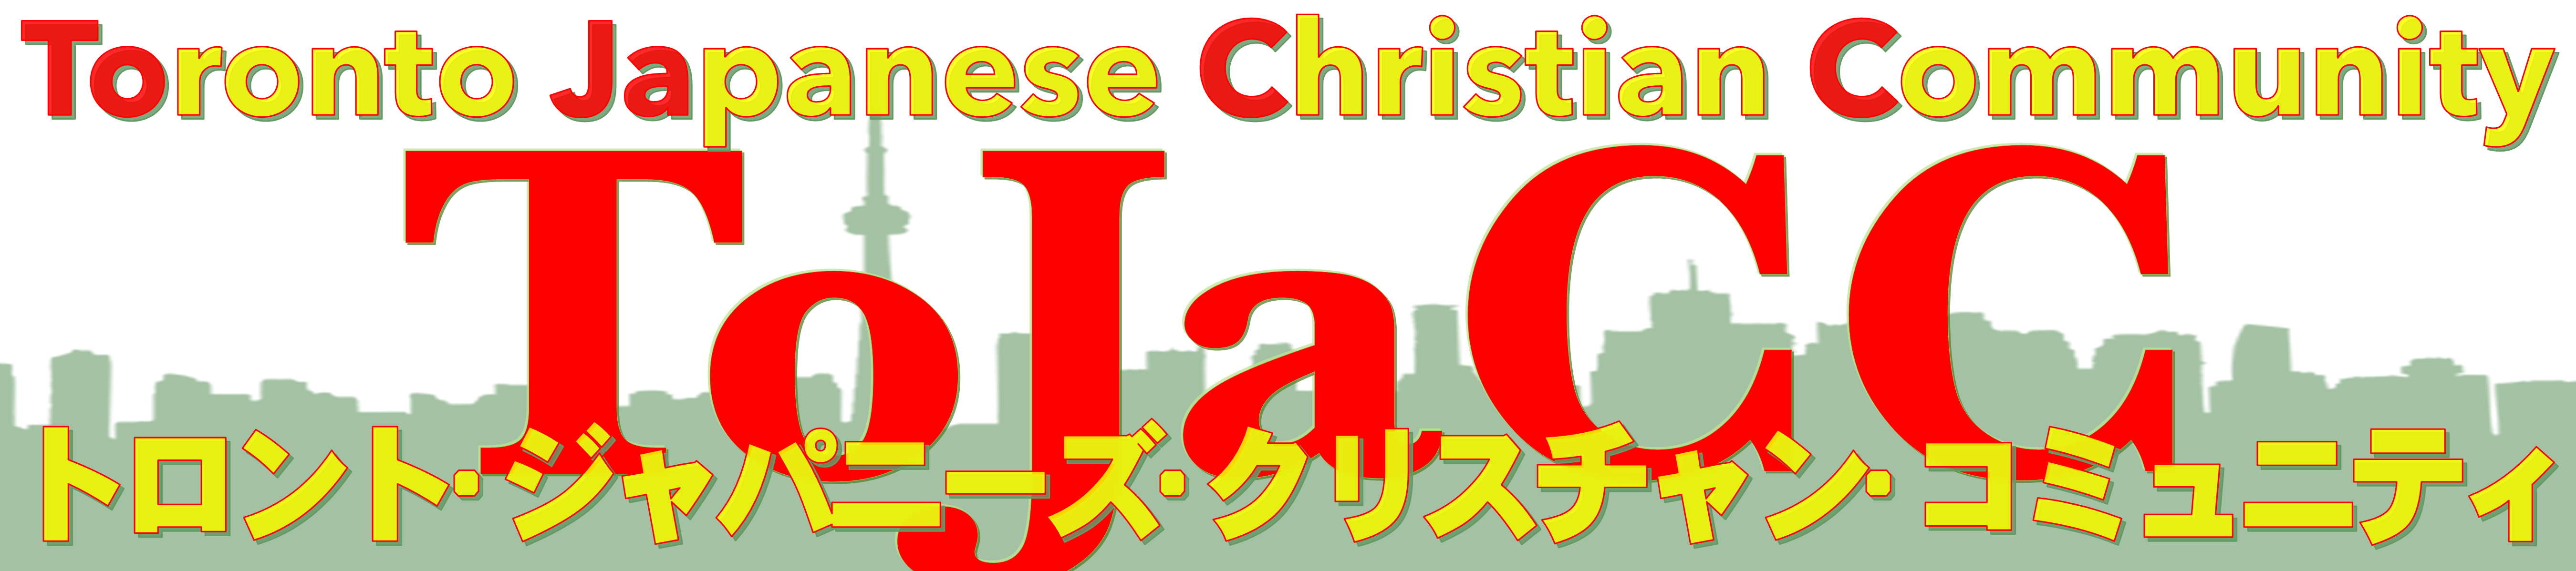 ToJaCC: Toronto Japanese Christian Community